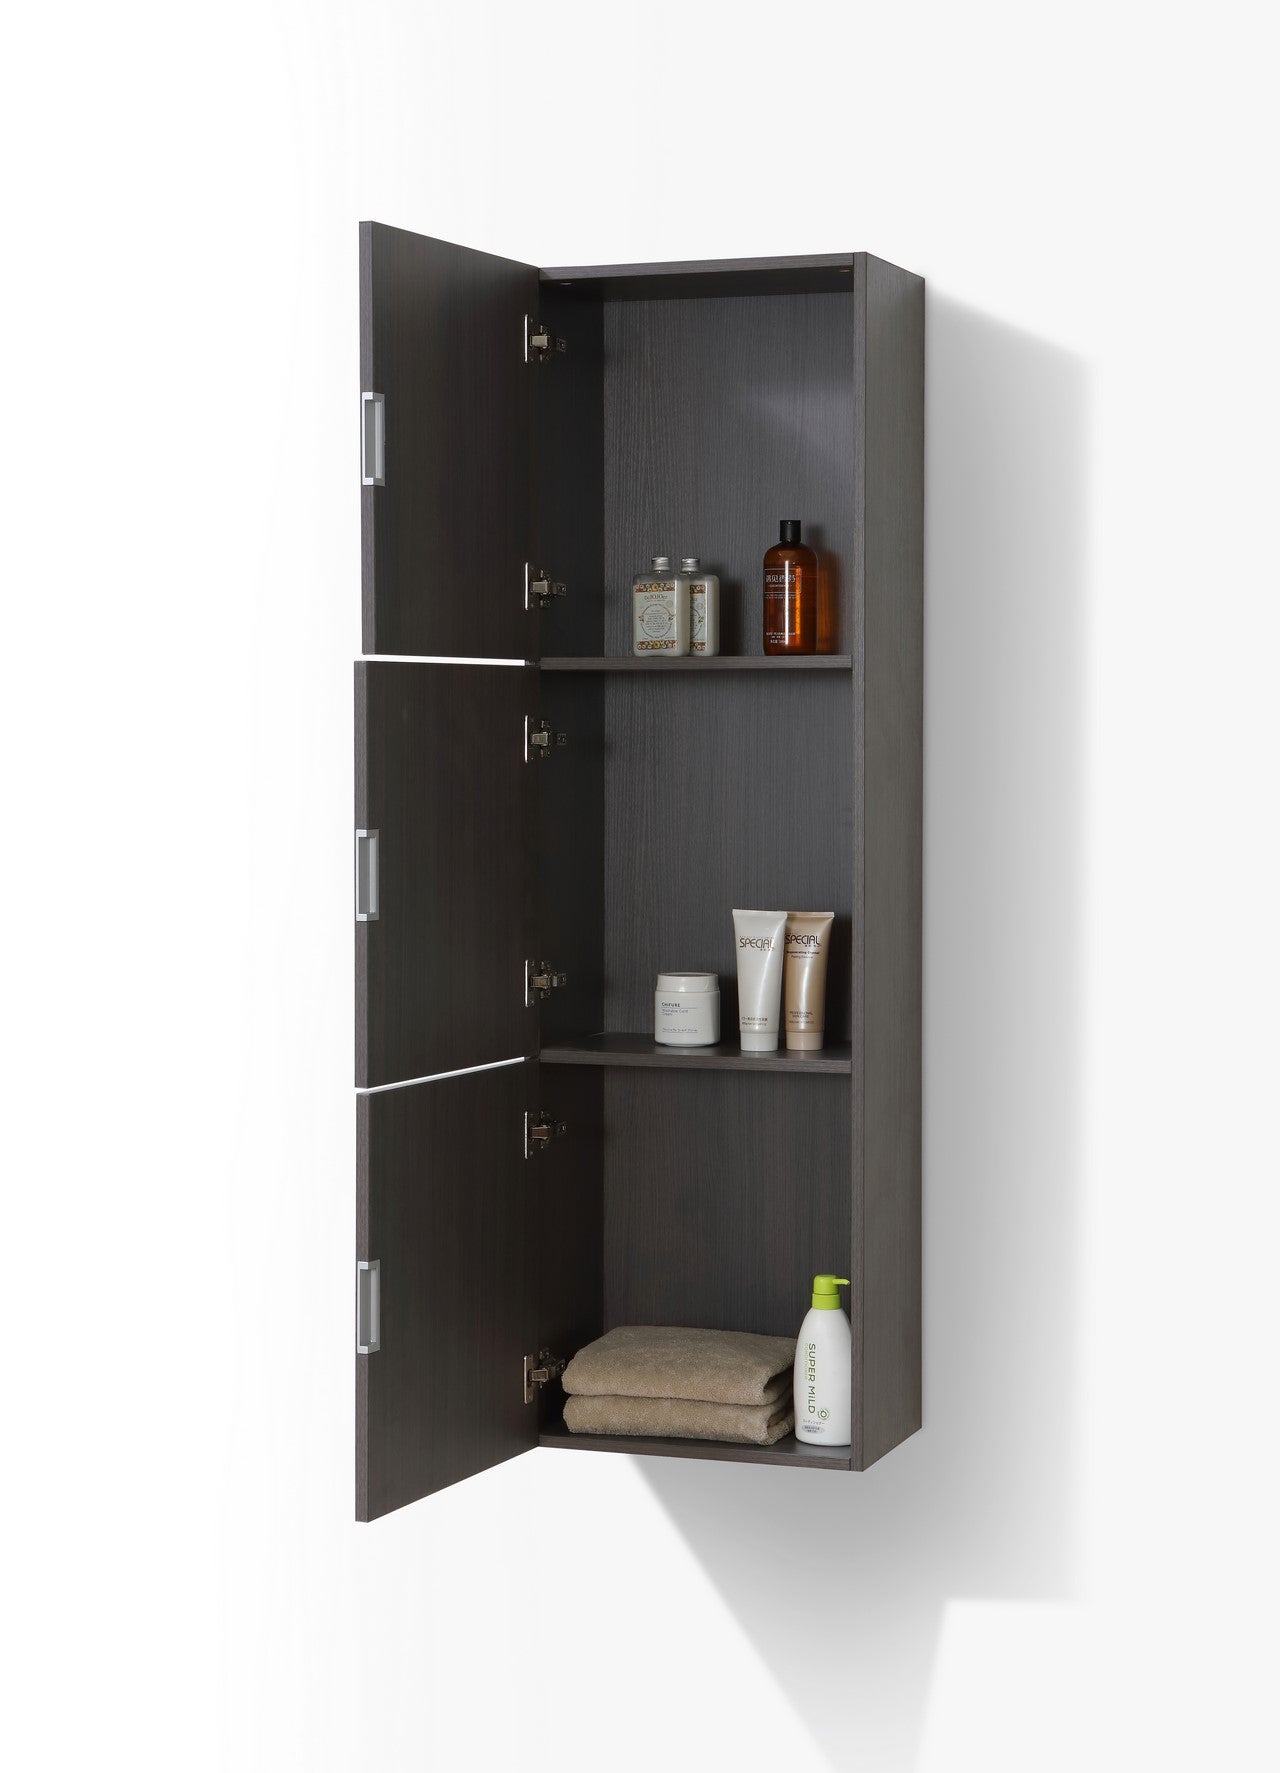 Bathroom High Gloss Gray Oak Linen Side Cabinet w/ 3 Large Storage Areas